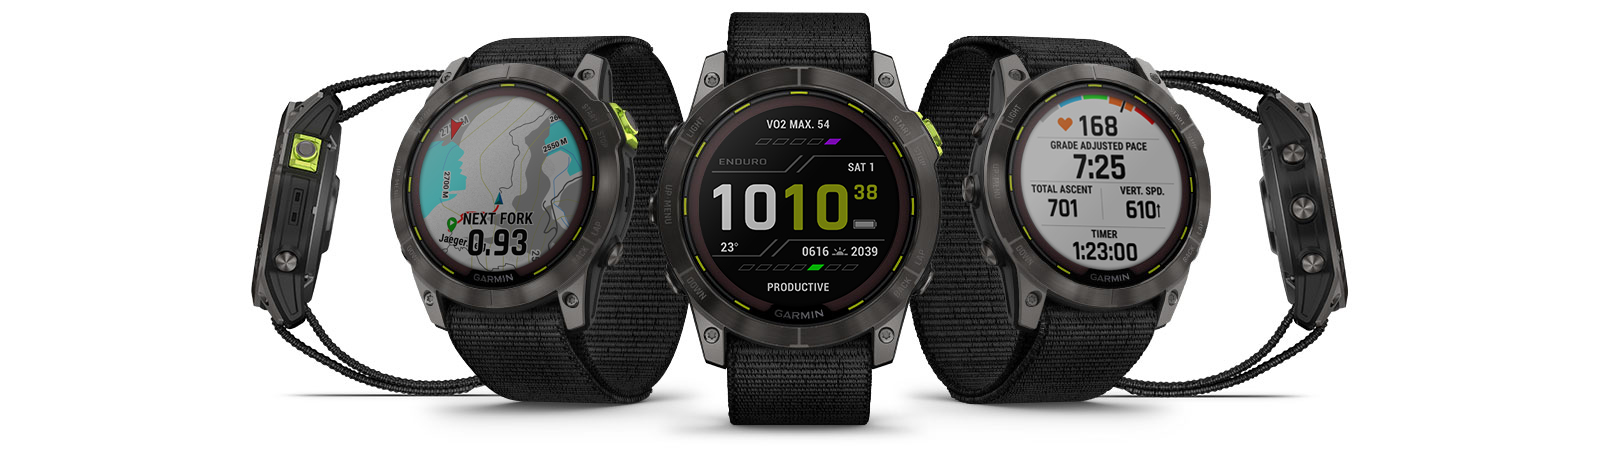 1-Garmin-Enduro-2-smart-watch